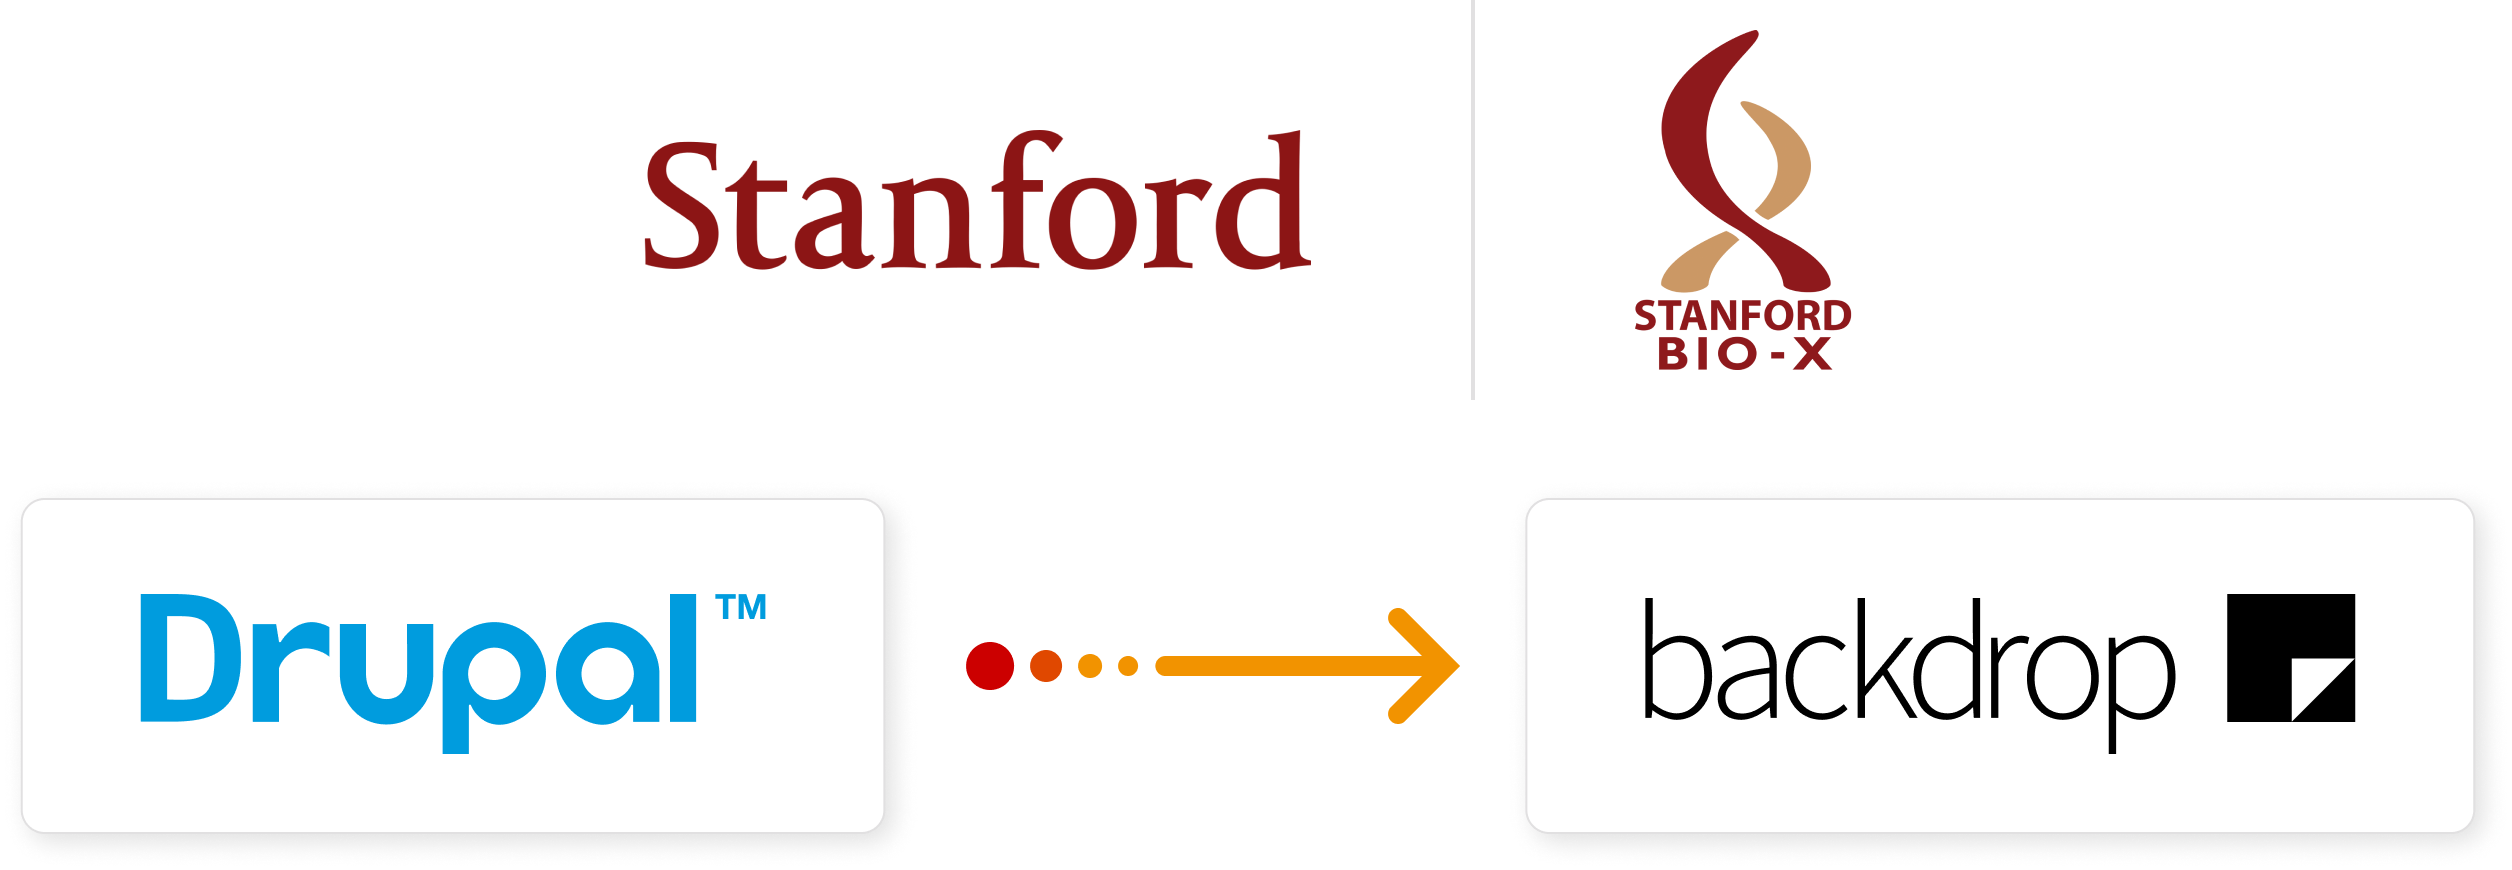 Stanford University, Bio-X, Drupal, and Backdrop logos